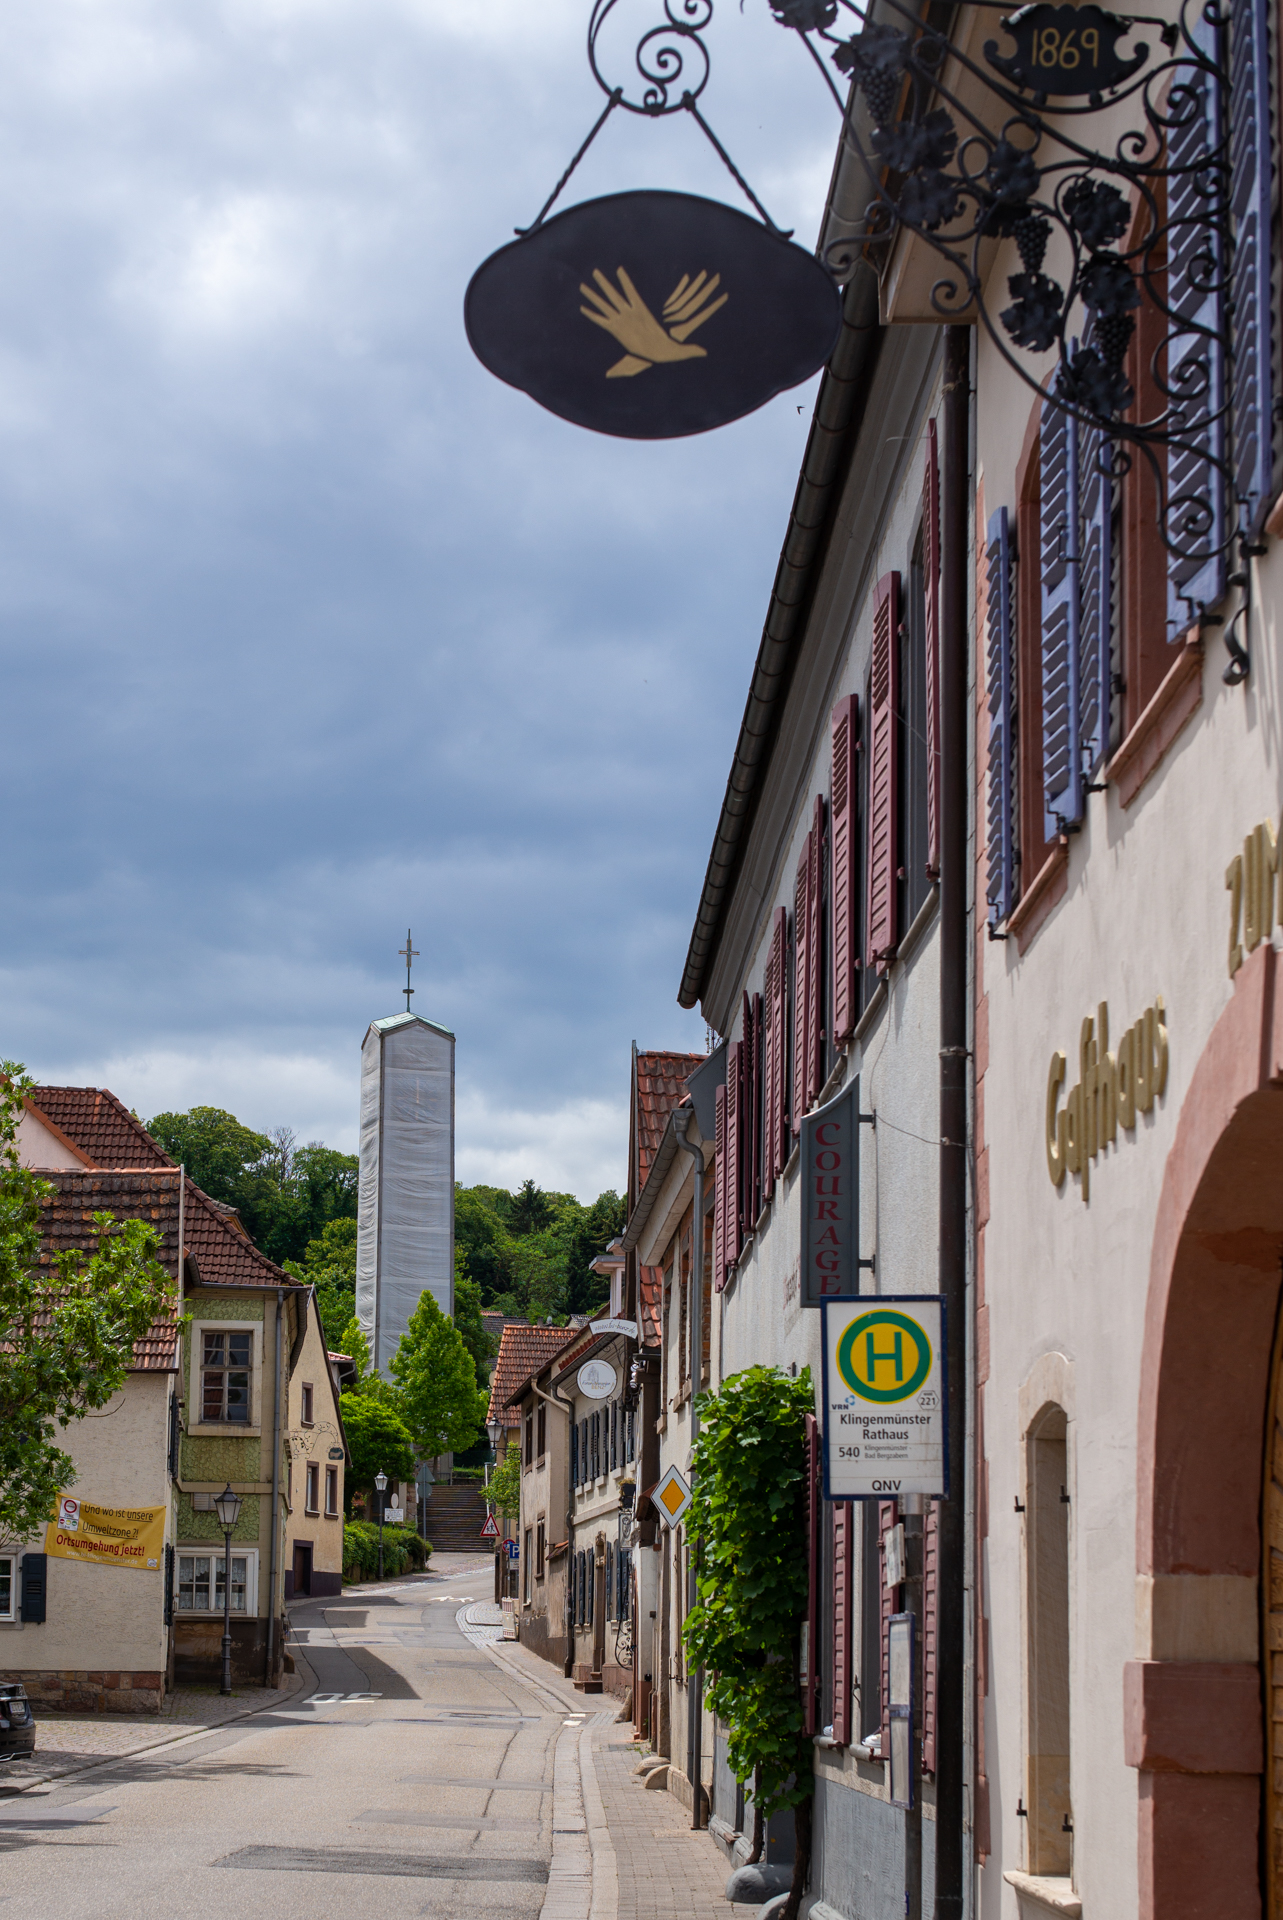 Verhüllter Kirchturm in Klingenmünster